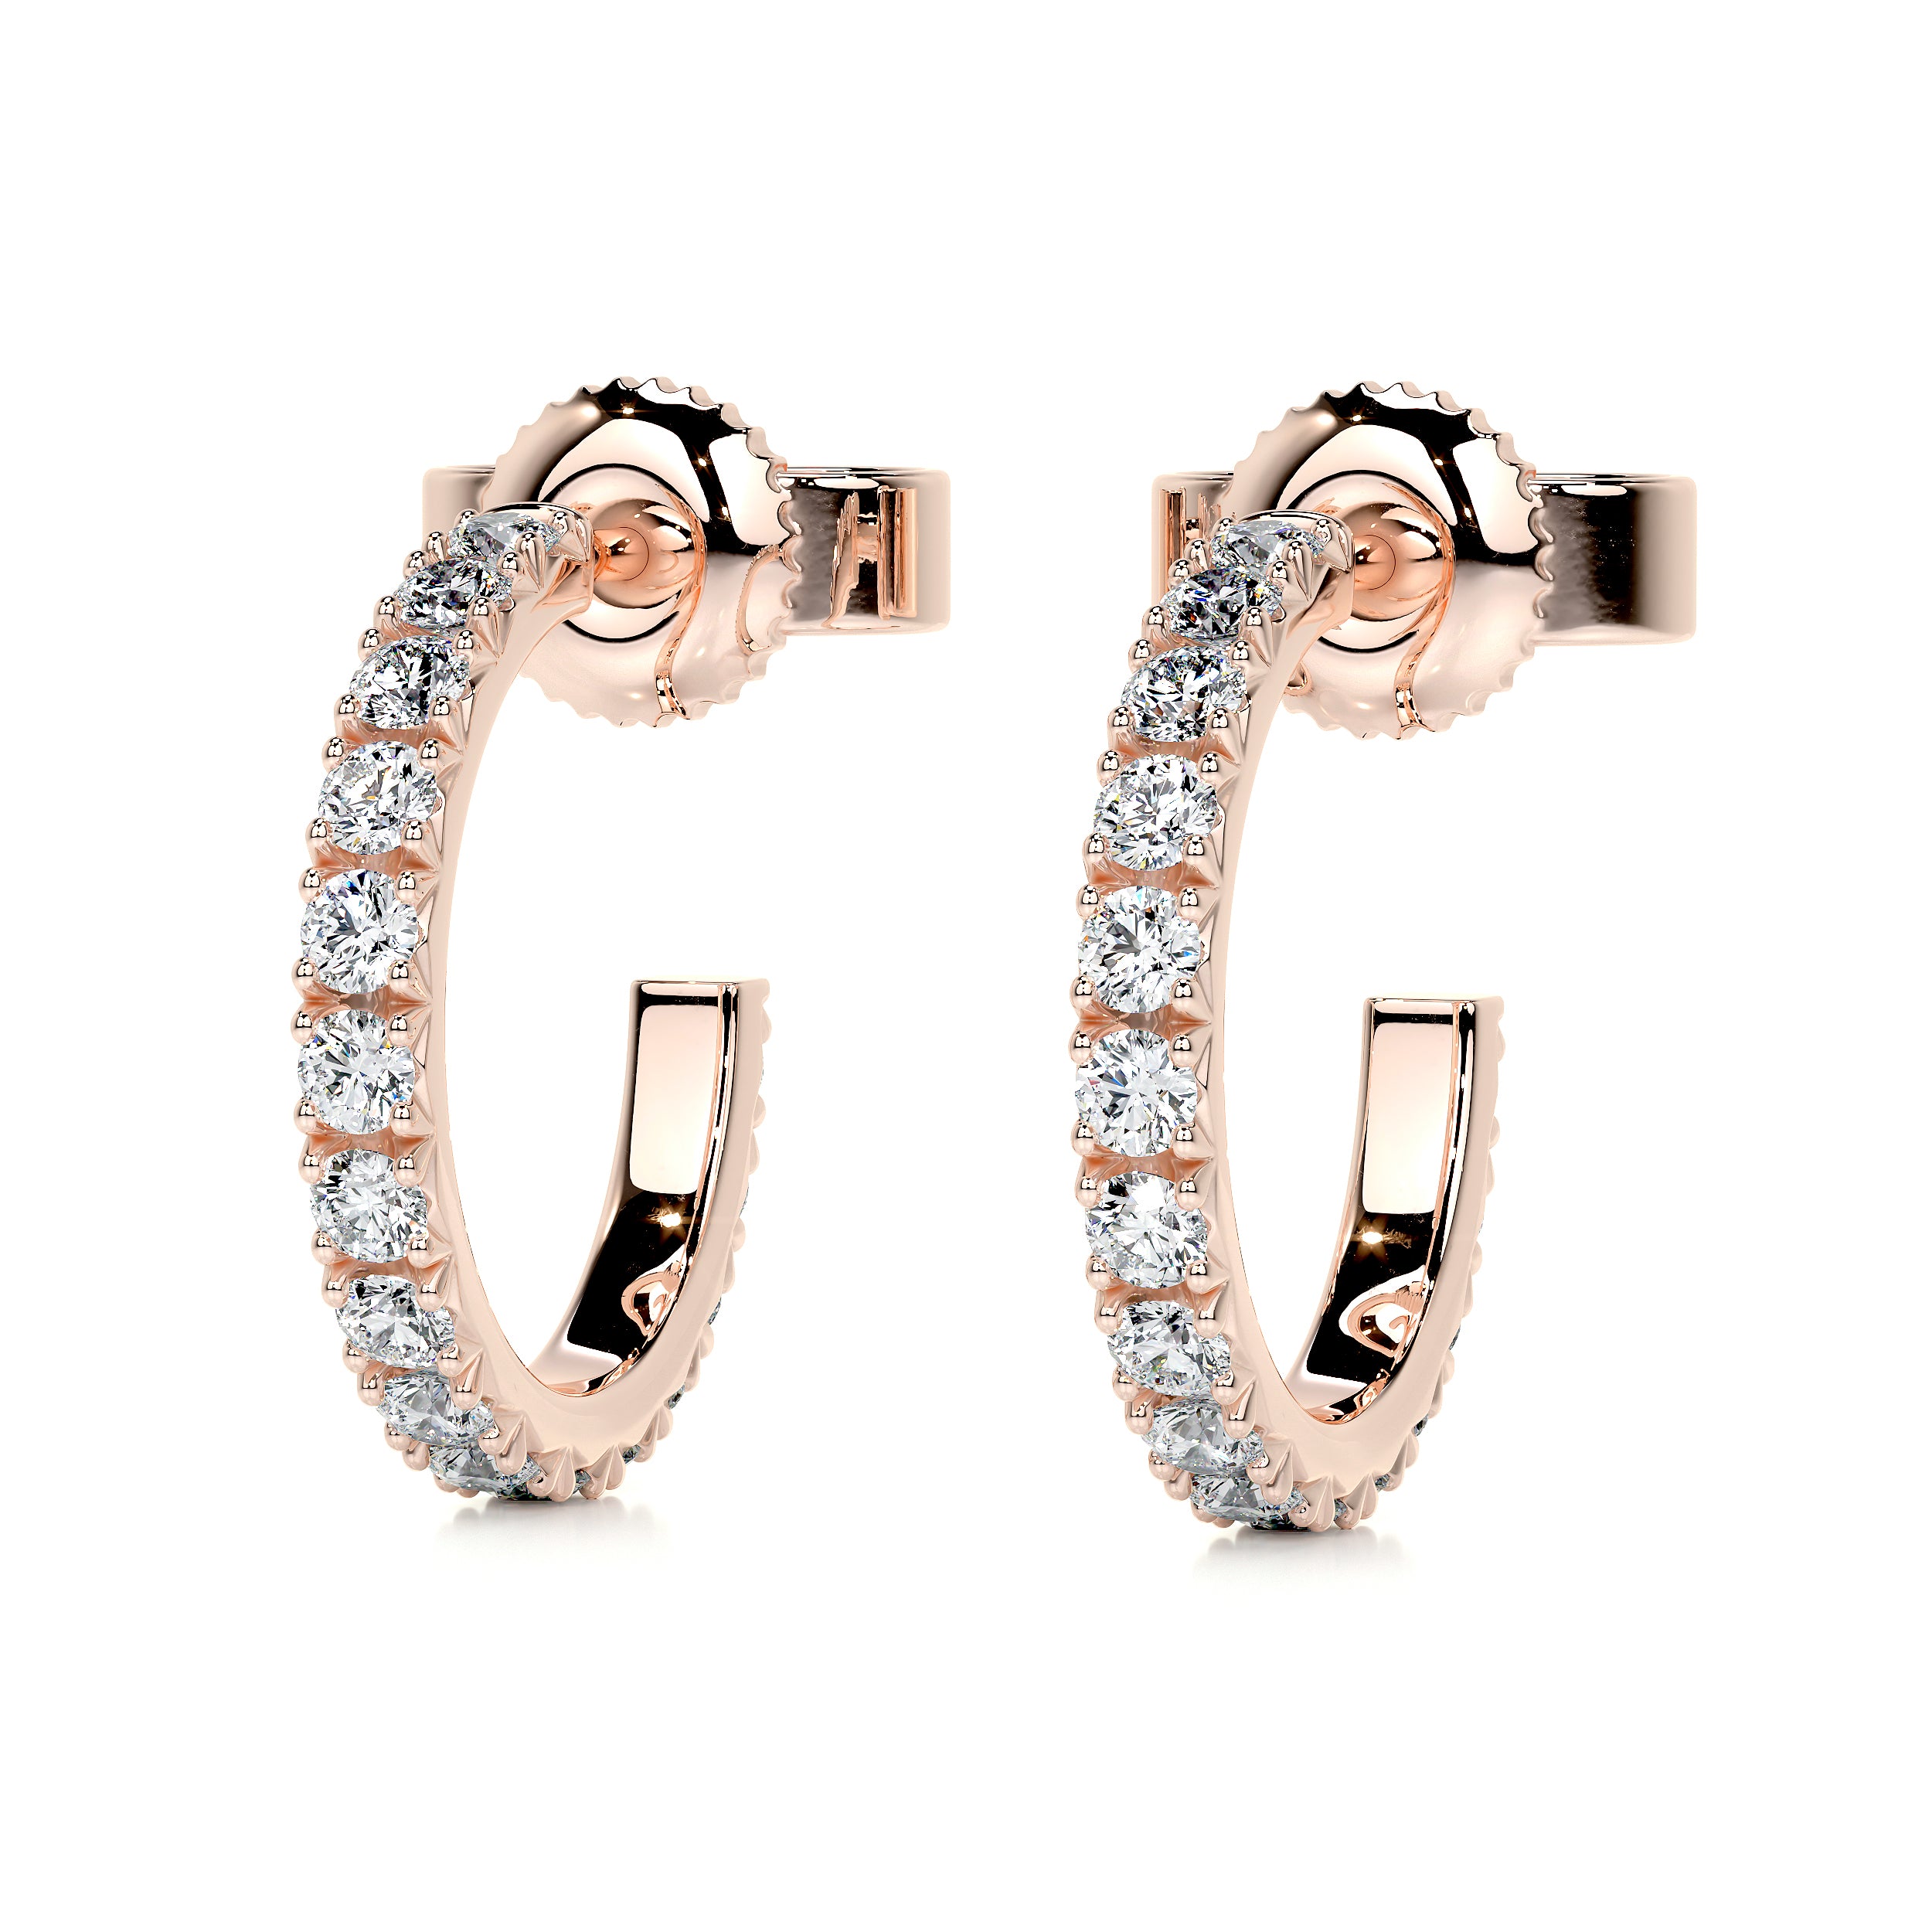 Nicole Diamond Earrings   (2.5 Carat) -14K Rose Gold